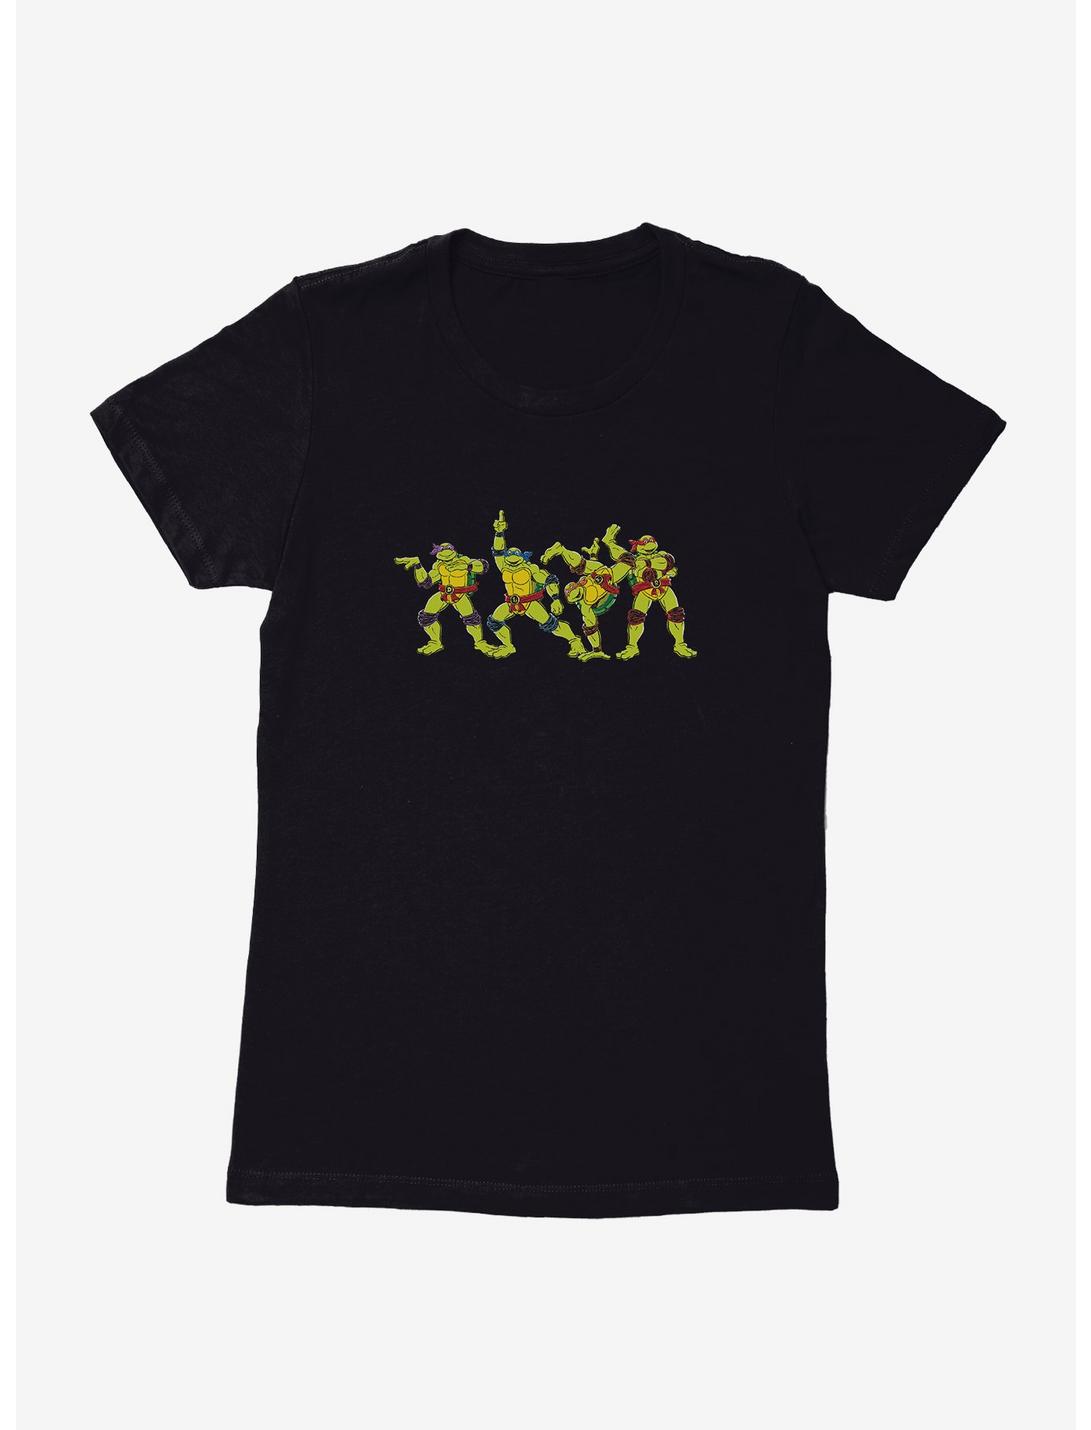 Teenage Mutant Ninja Turtles Spell It Out Womens T-Shirt, BLACK, hi-res